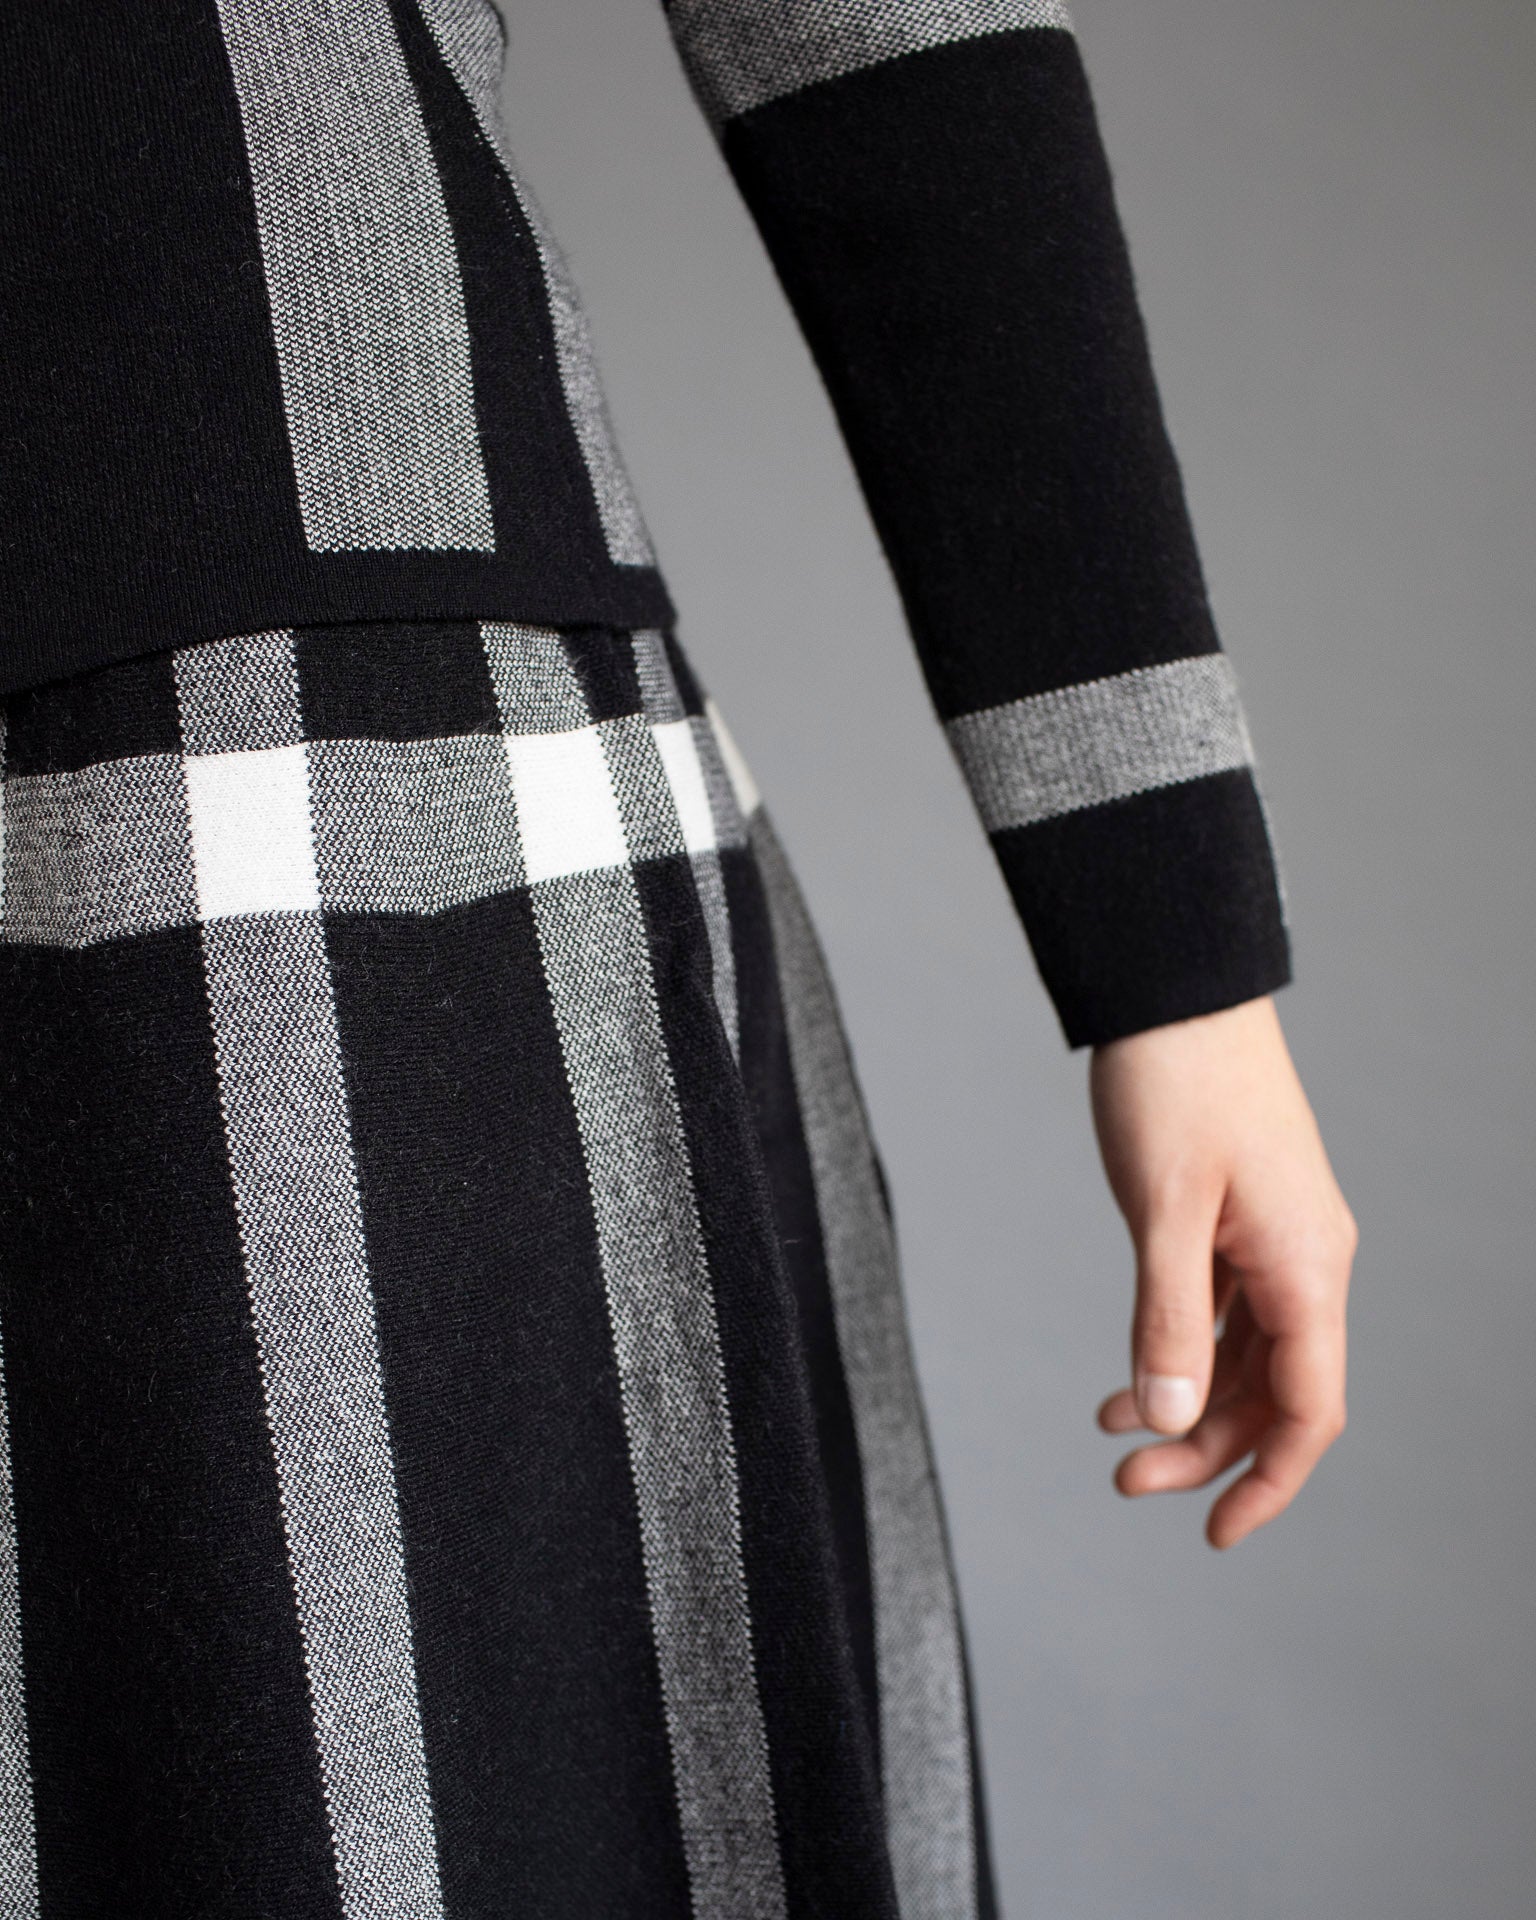 Black and White Checkered Knit Skirt